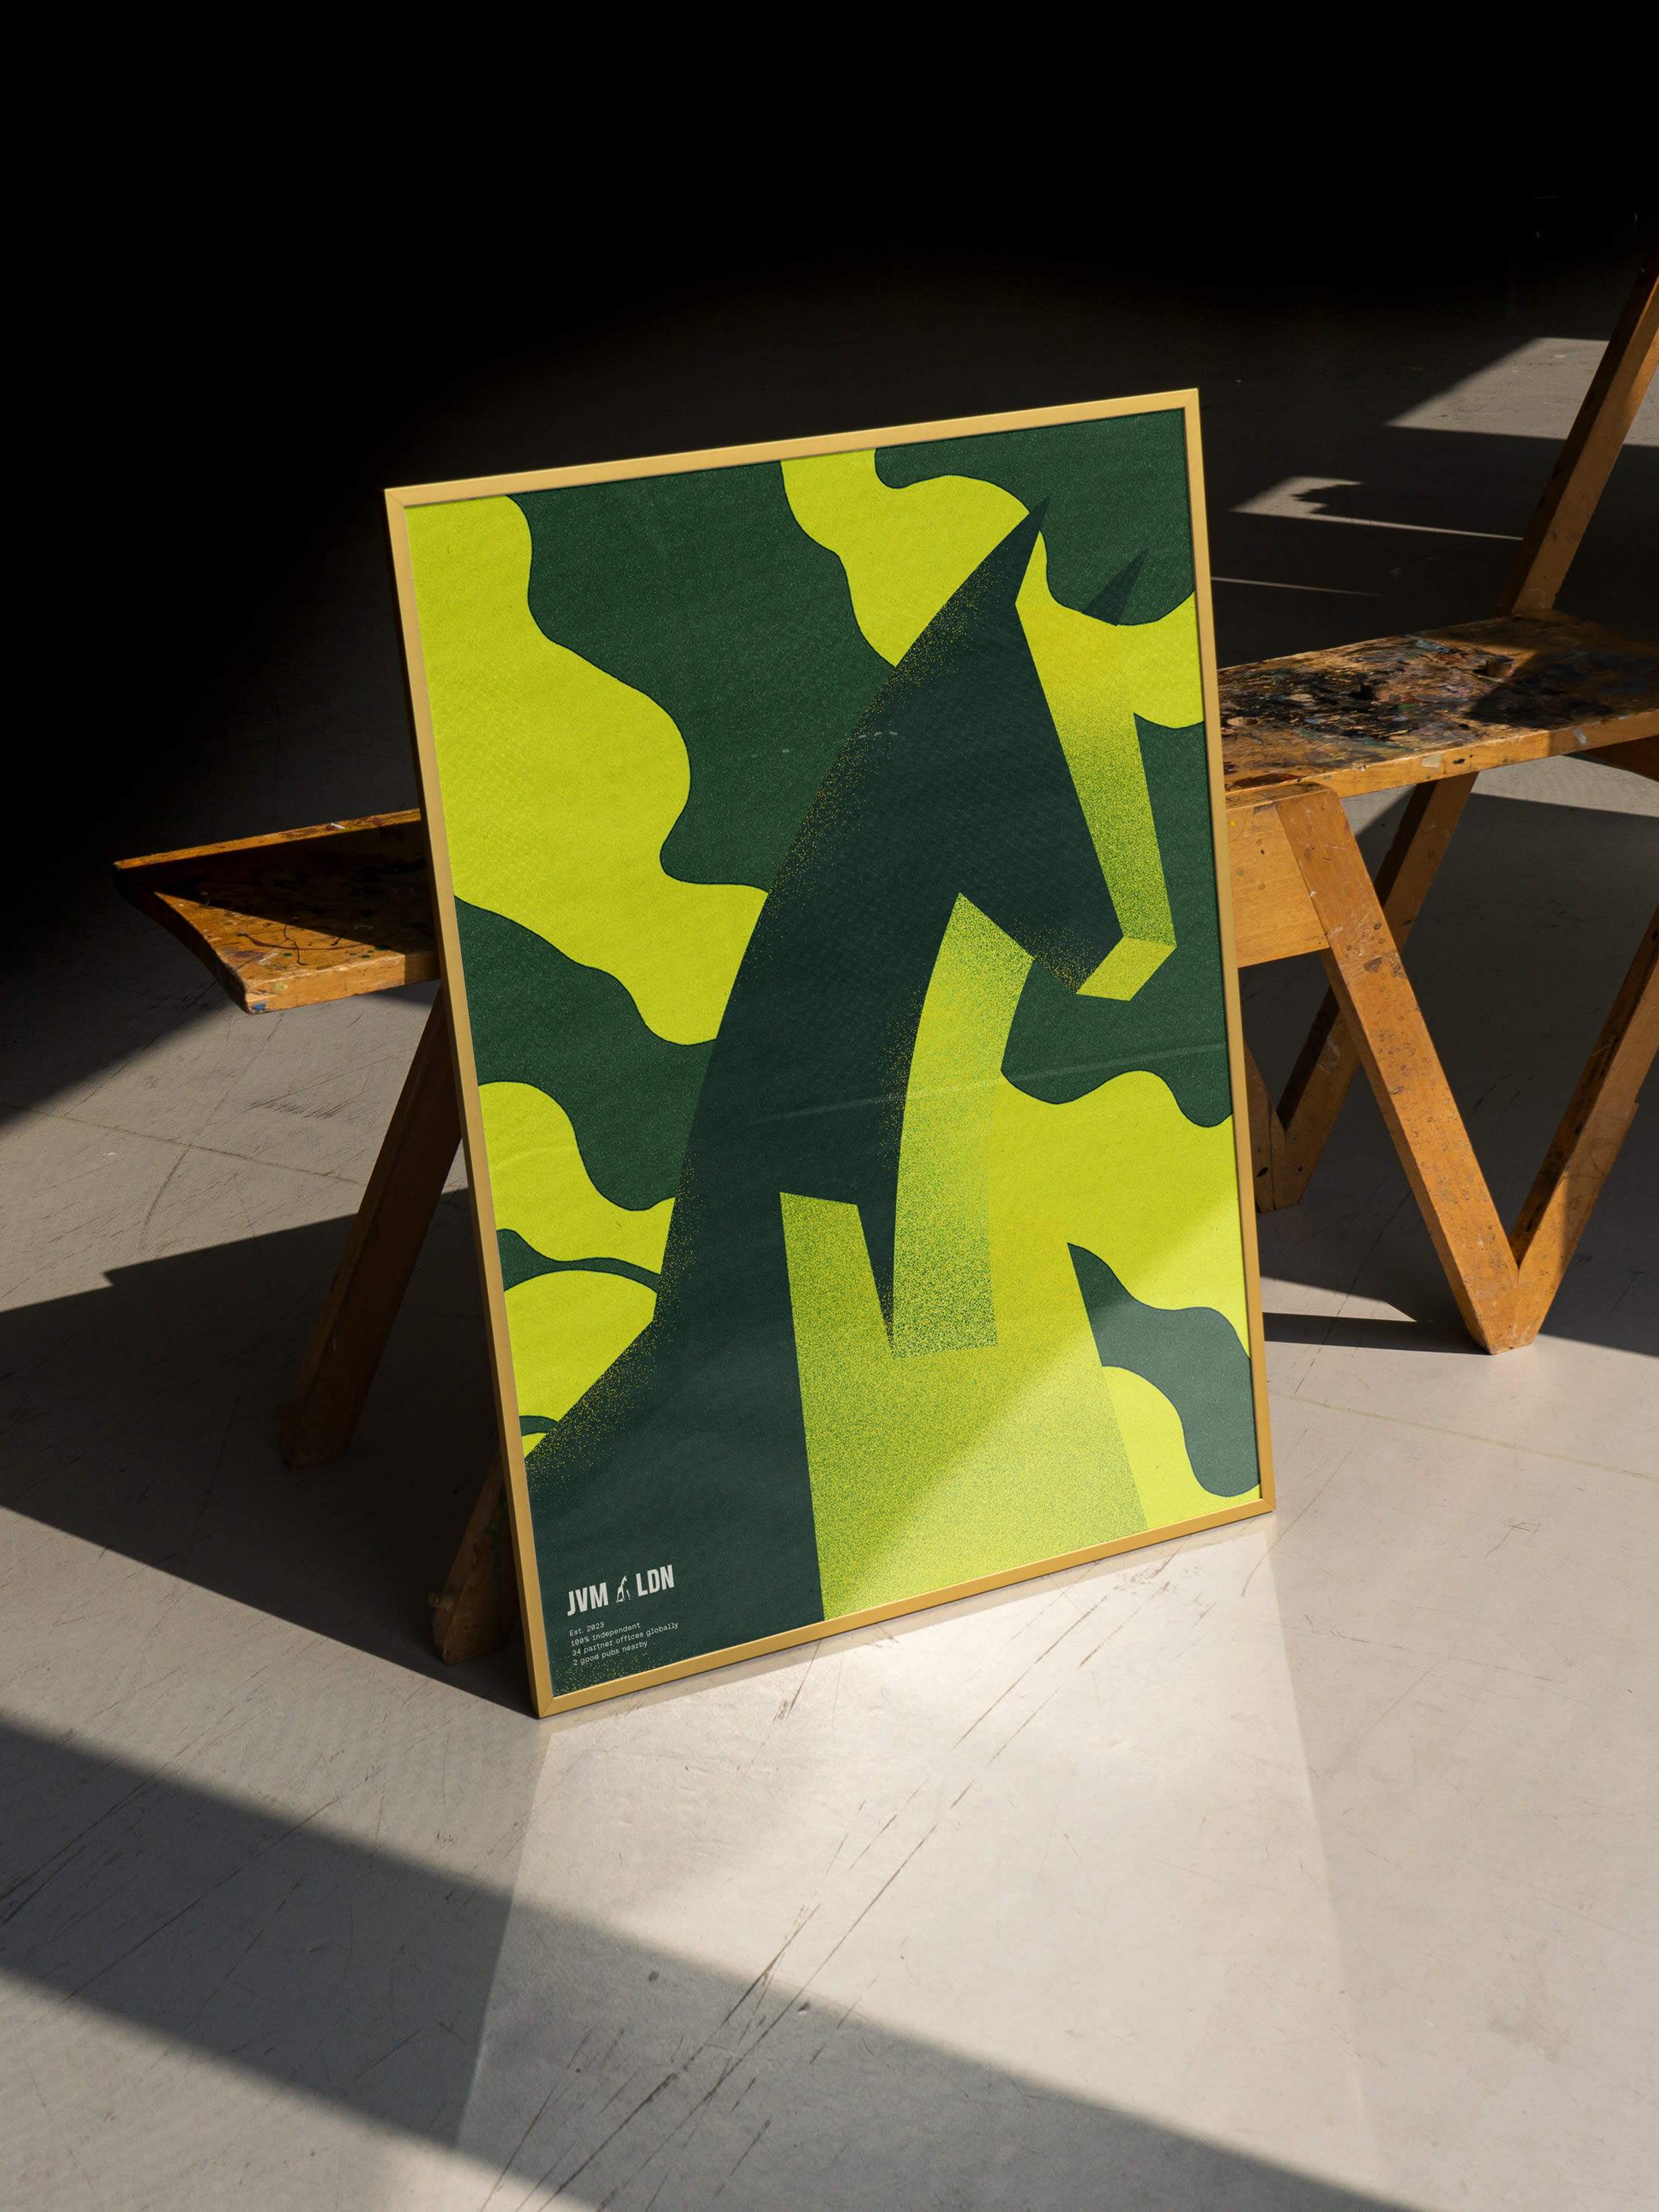 Jung von Matt London framed print of troyan horse in green camouflage pattern